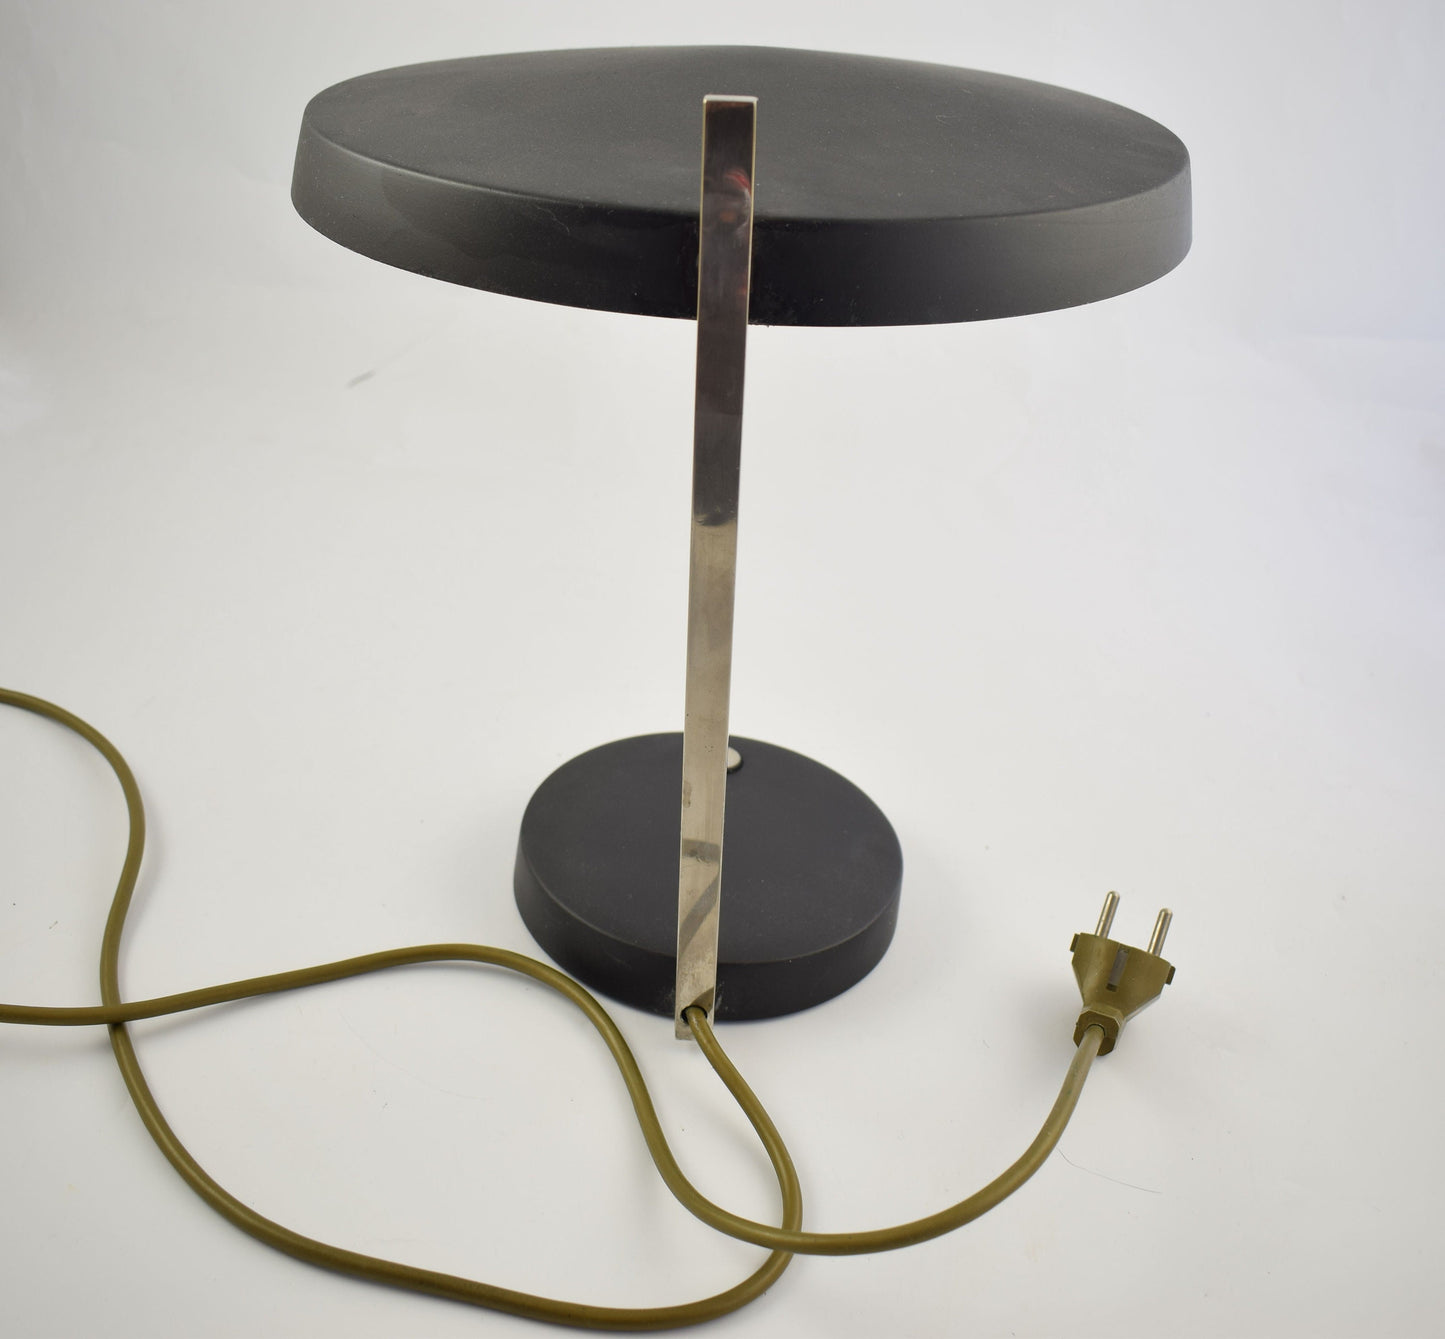 Hillebrand leuchten tafellamp Oslo, zwarte bureaulamp ontworpen door Heinz Pfaender 1962.